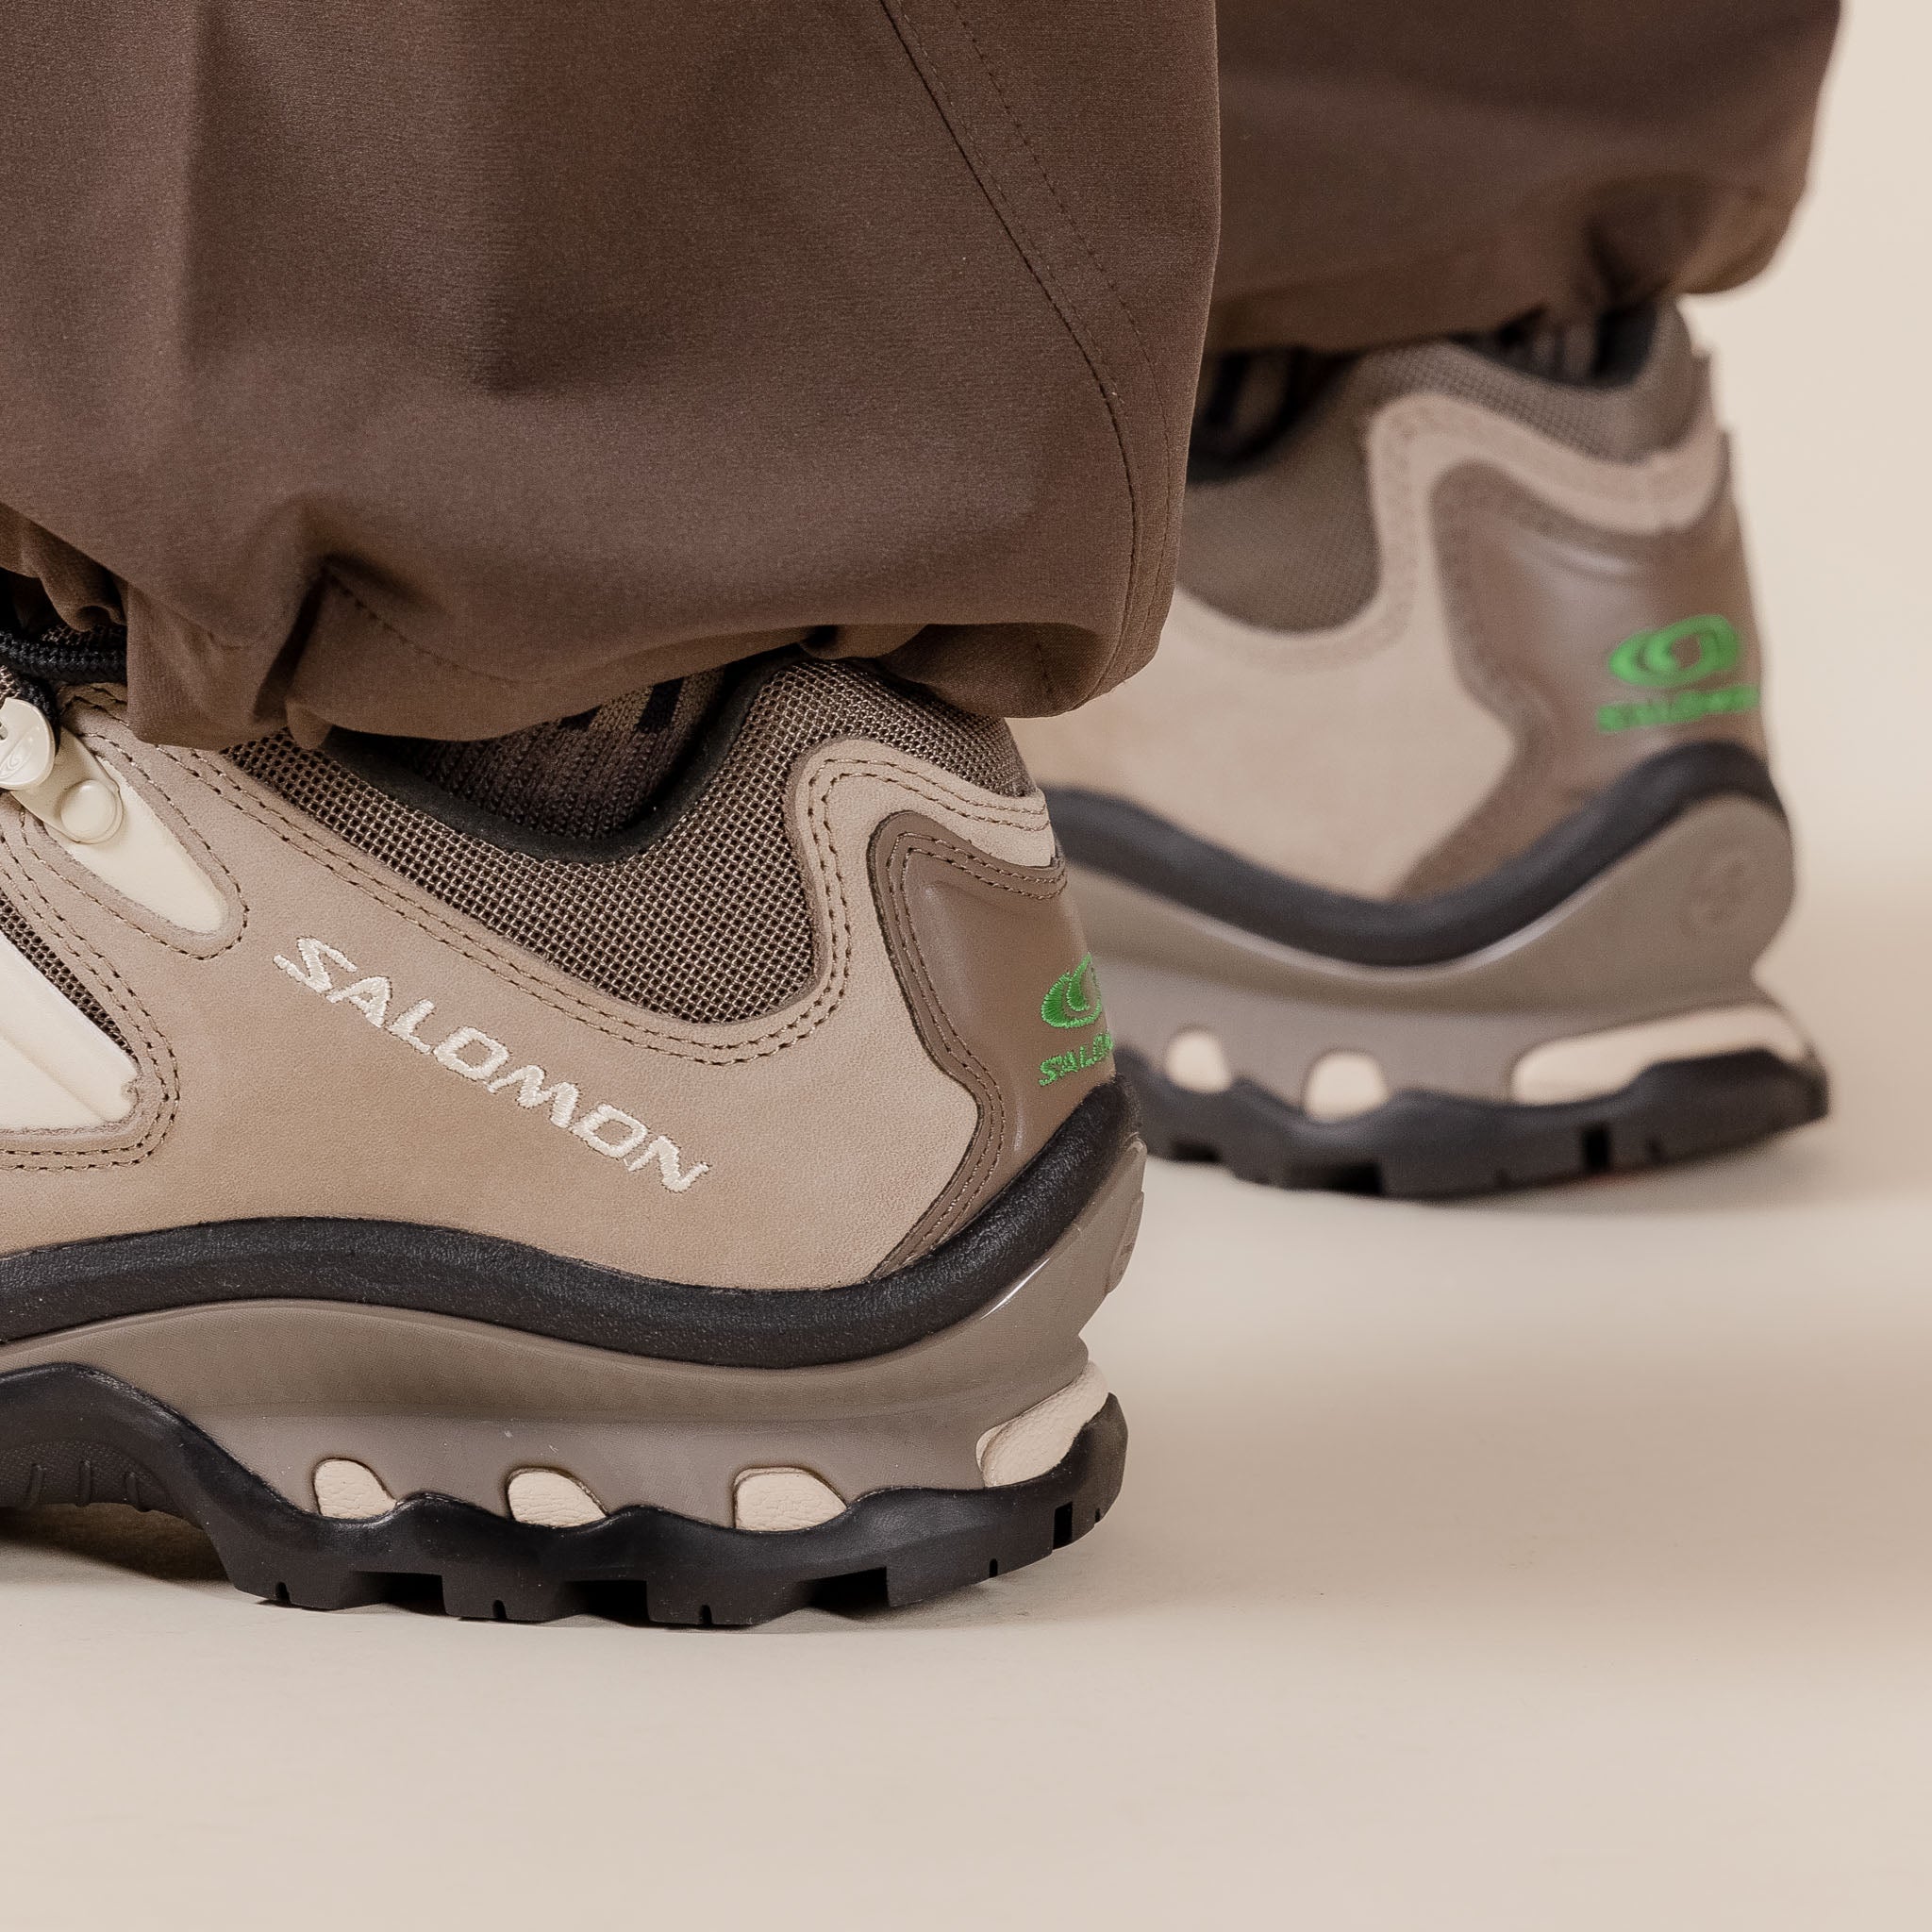 Salomon - XT Quest 2 - Falcon / Cement / Bright Green "Salomon stockists" "Salomon xt quest" "Salomon xt quest 2" "Salomon trail shoes" 